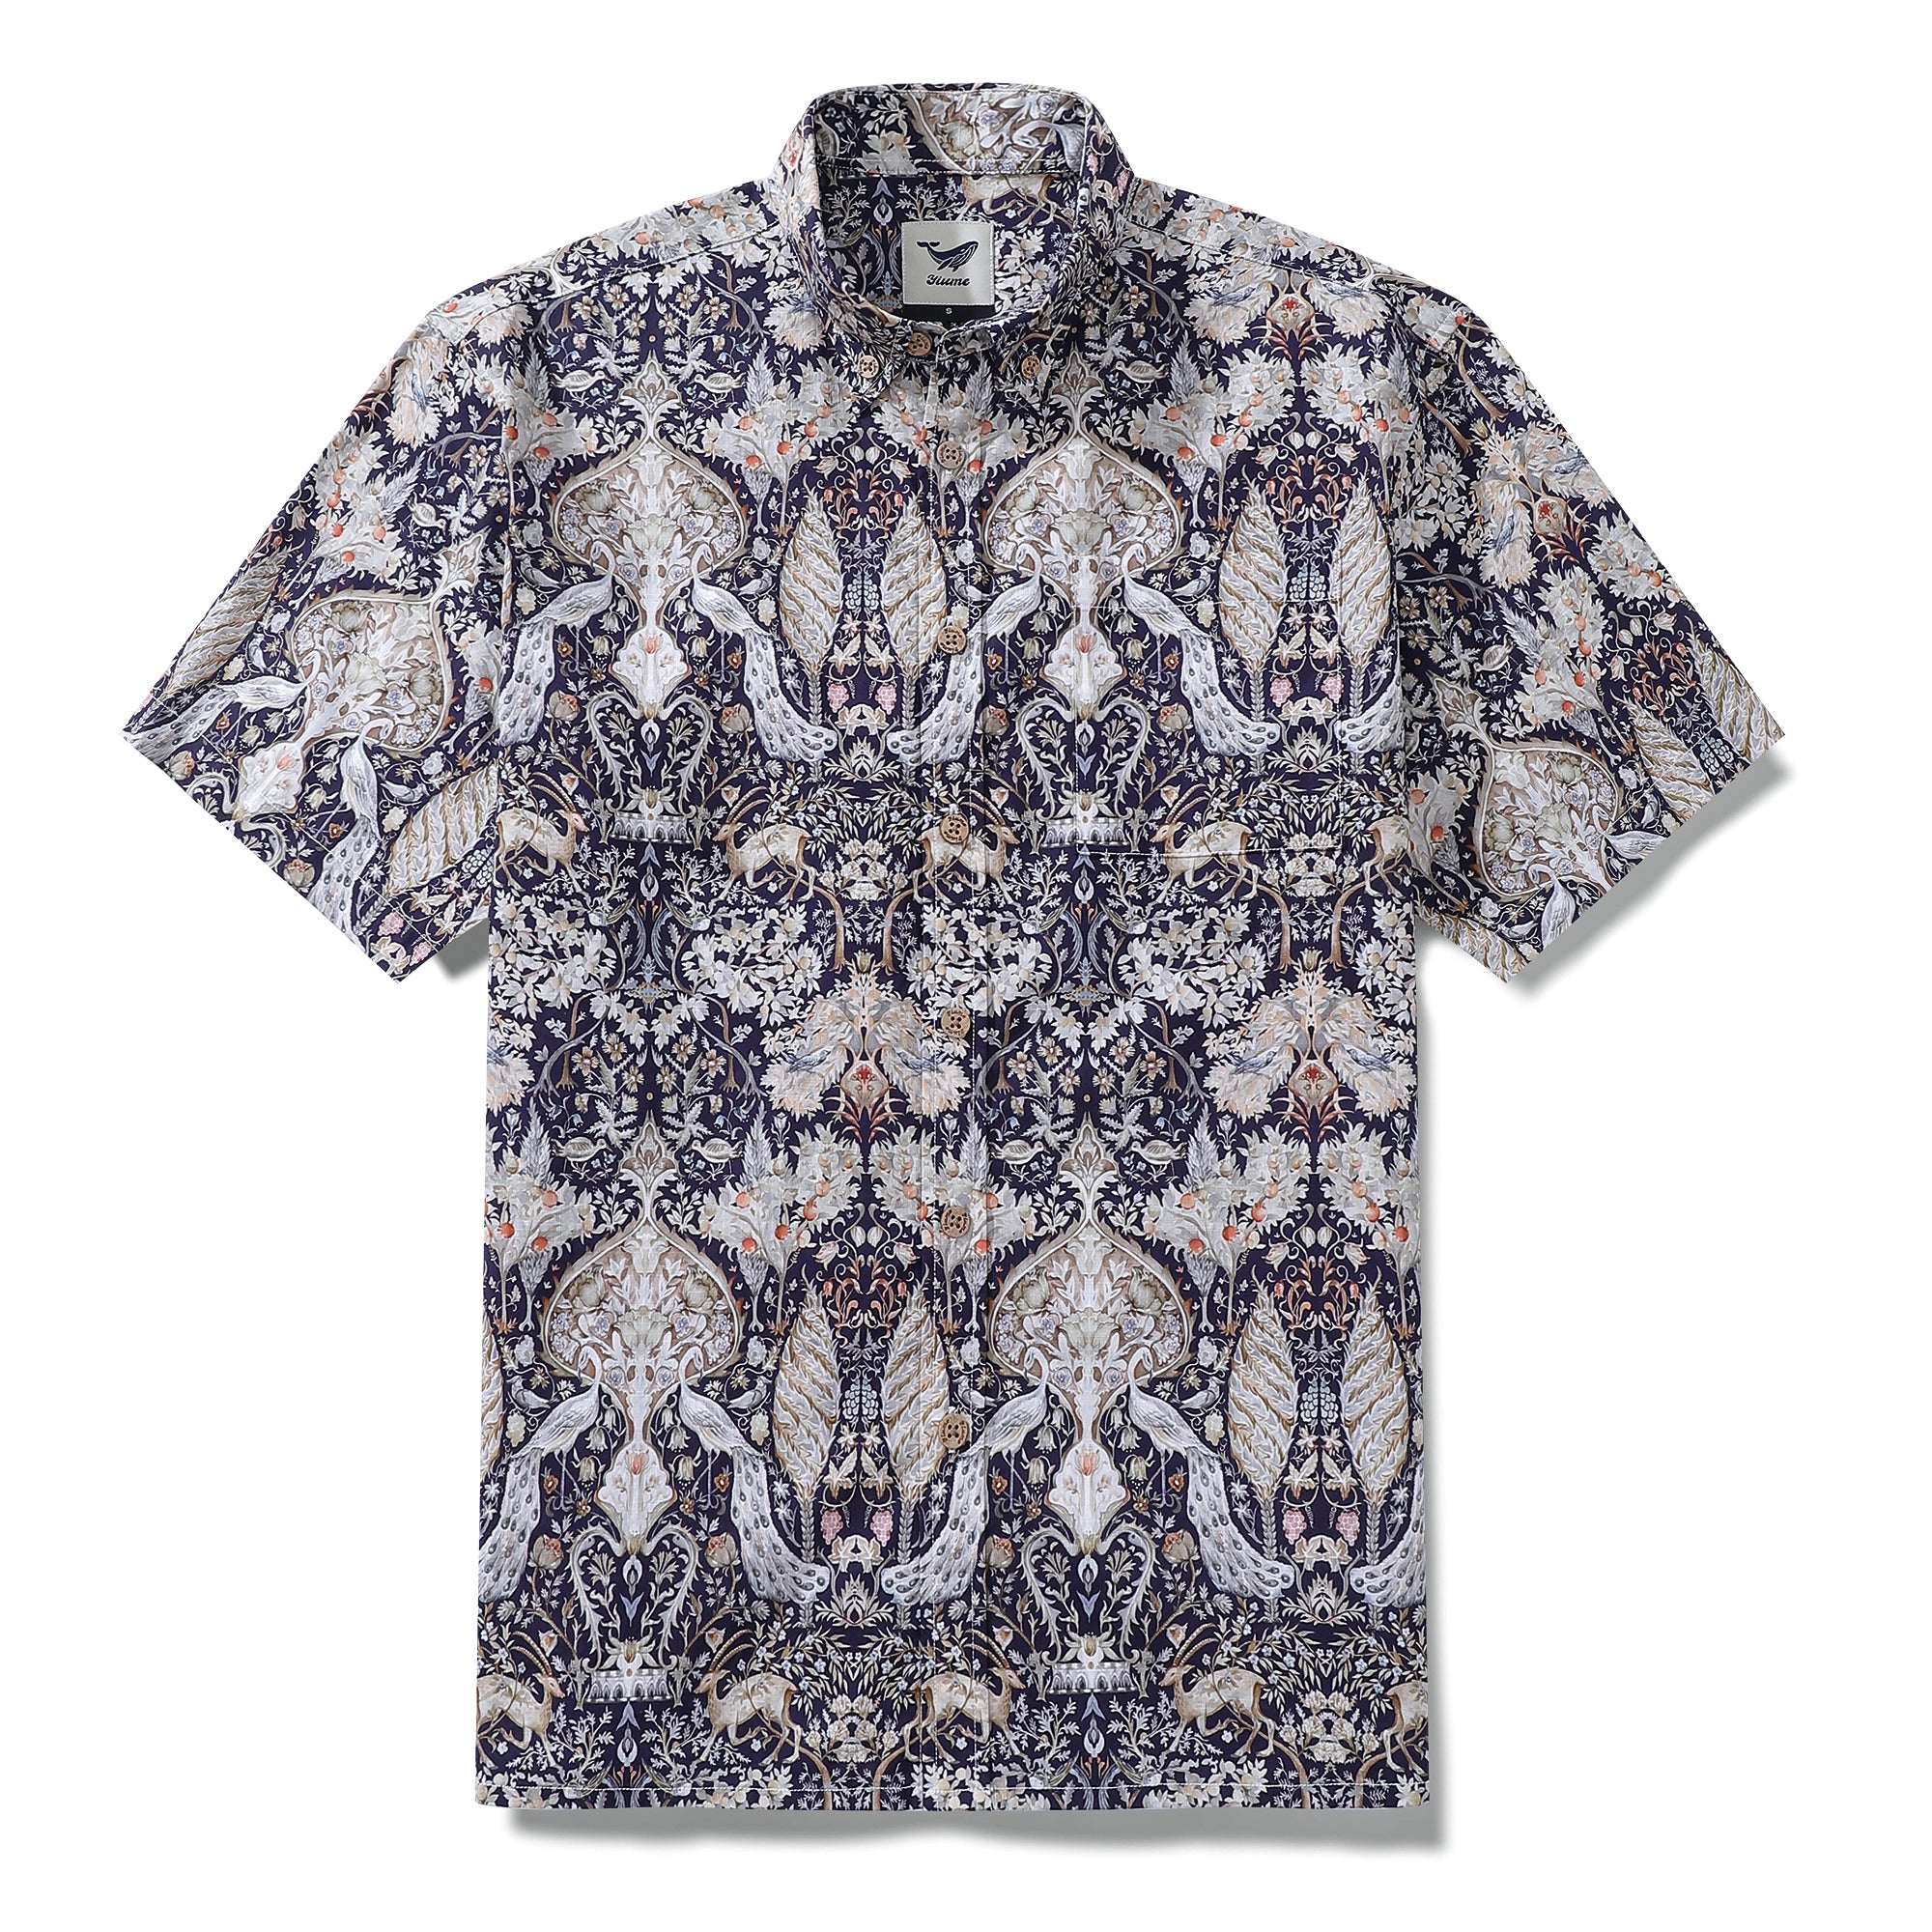 Men's Hawaiian Shirt The Garden of Serenity Cotton Button-down Short Sleeve 1940s Vintage Shirt